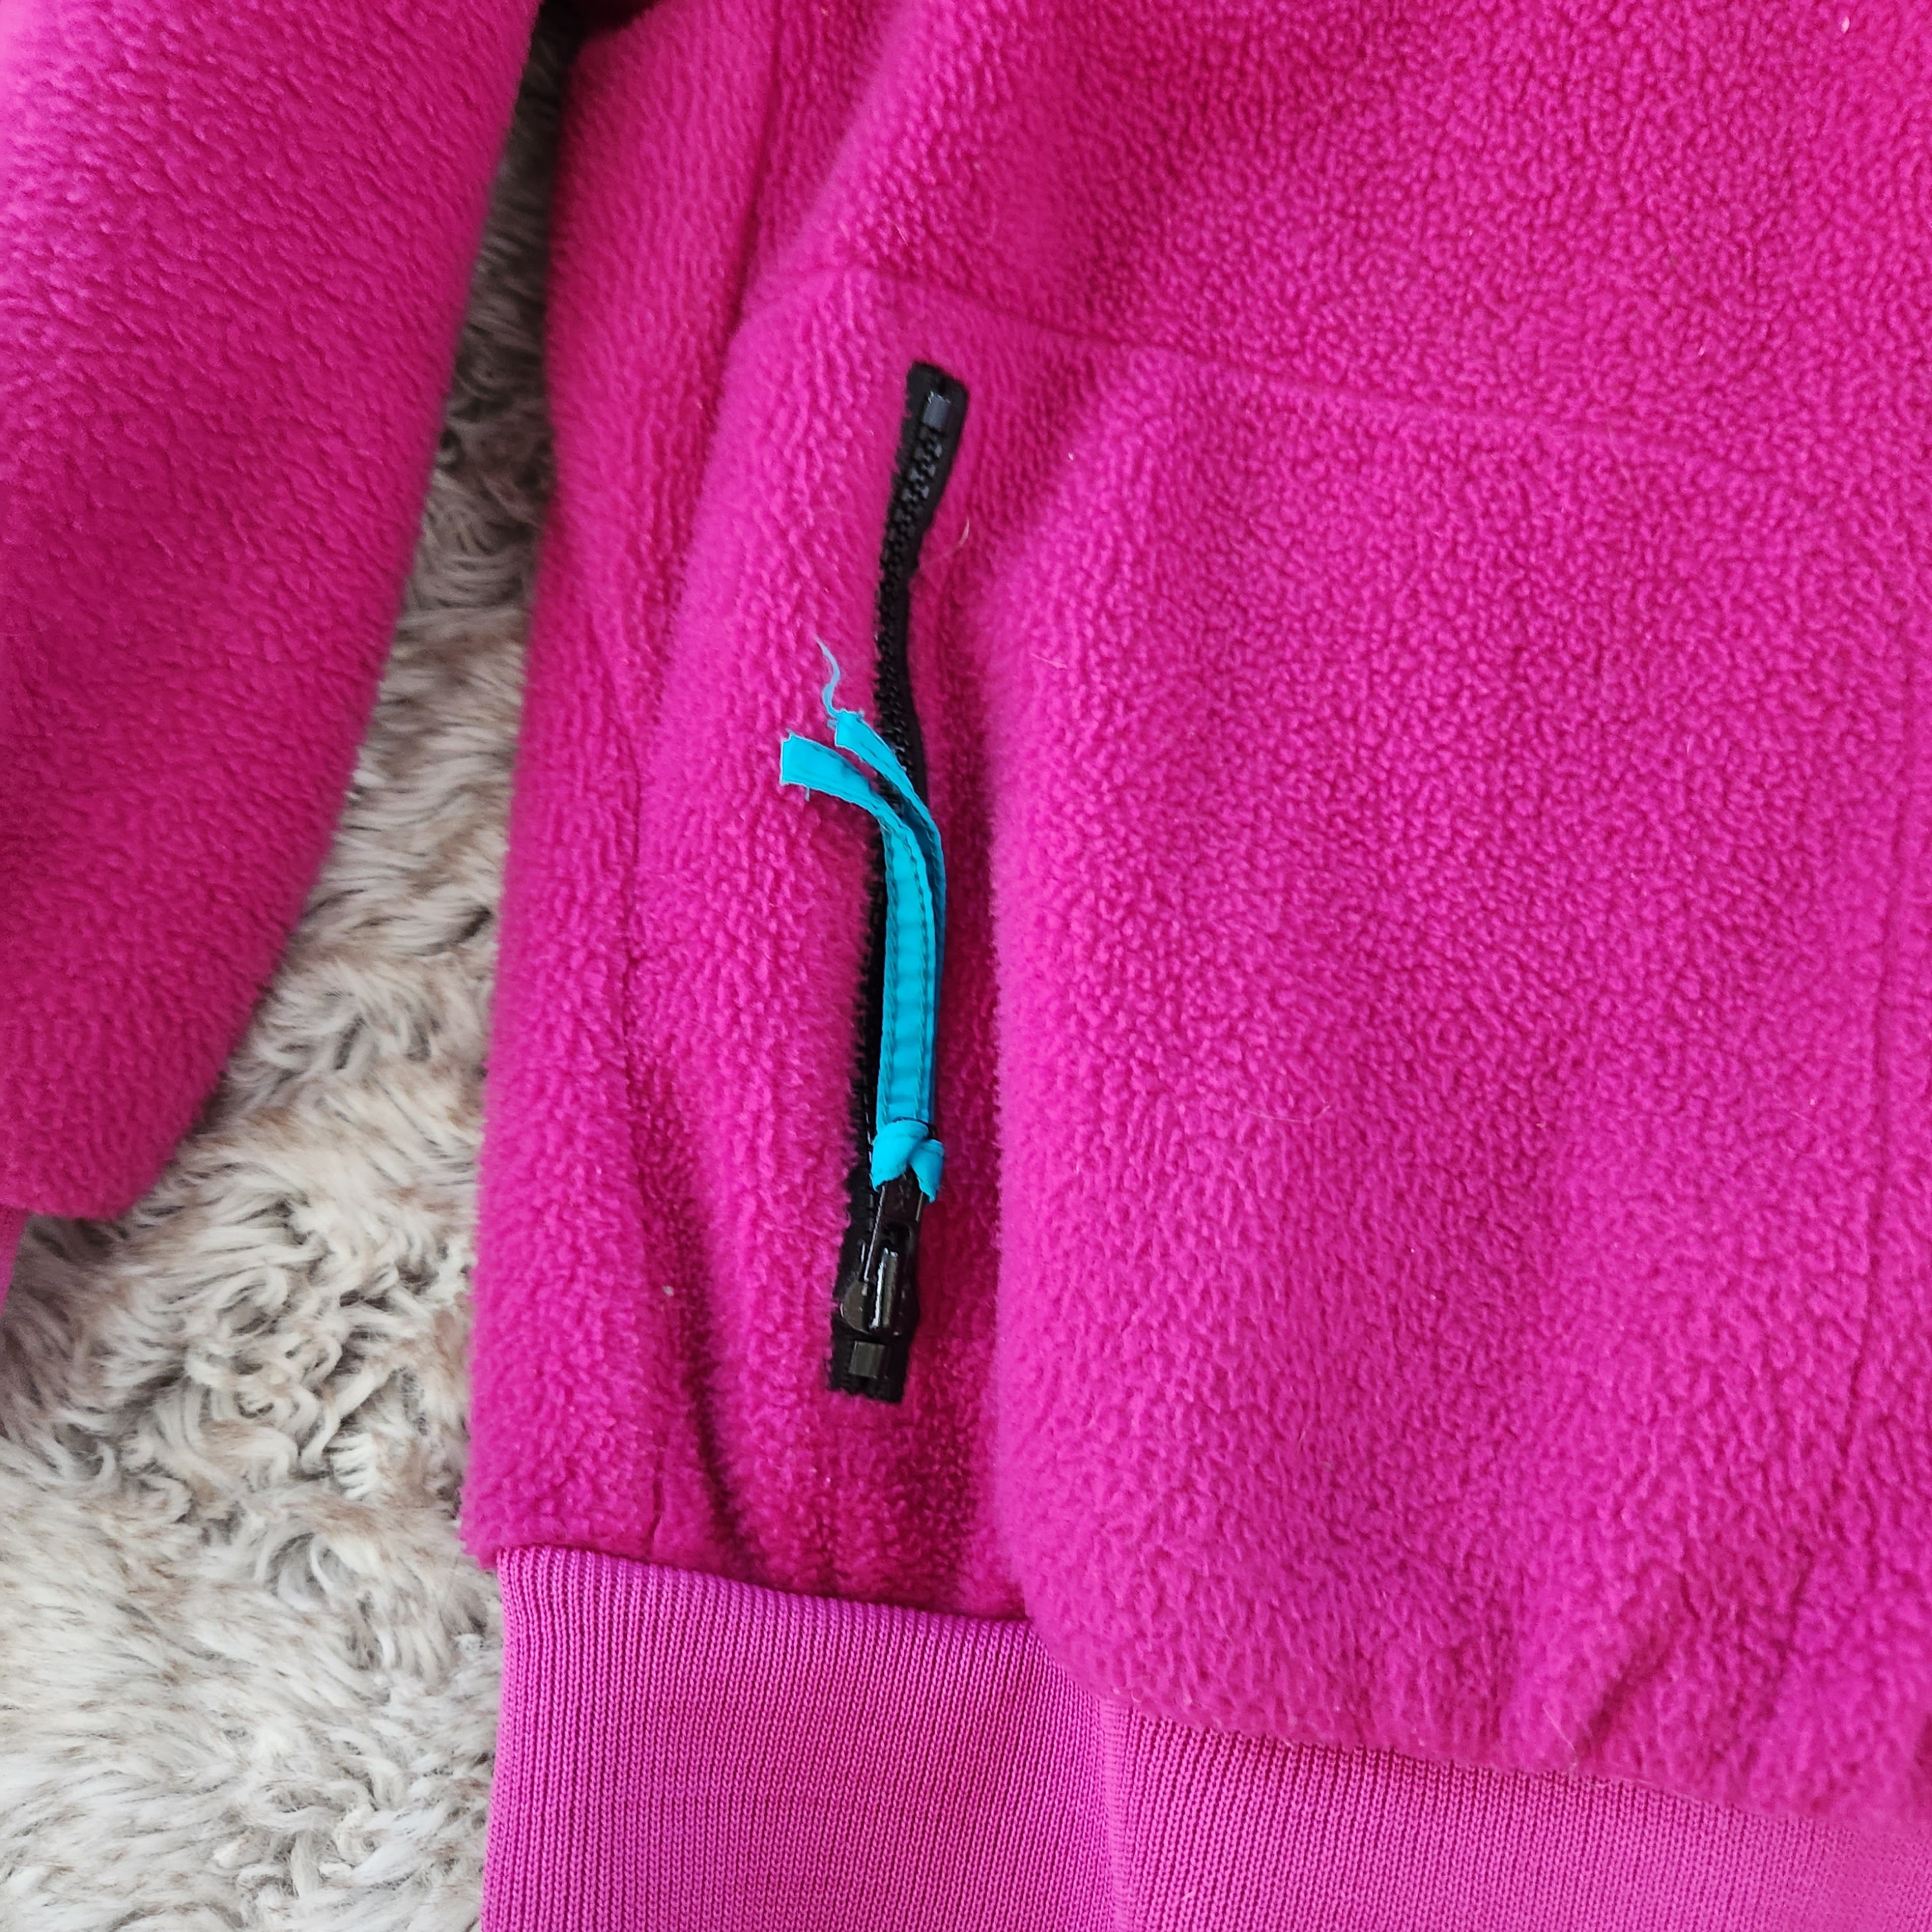 Columbia Sportswear Company Vintage Long Sleeve Pink Fleece Full Zip Jacket XL